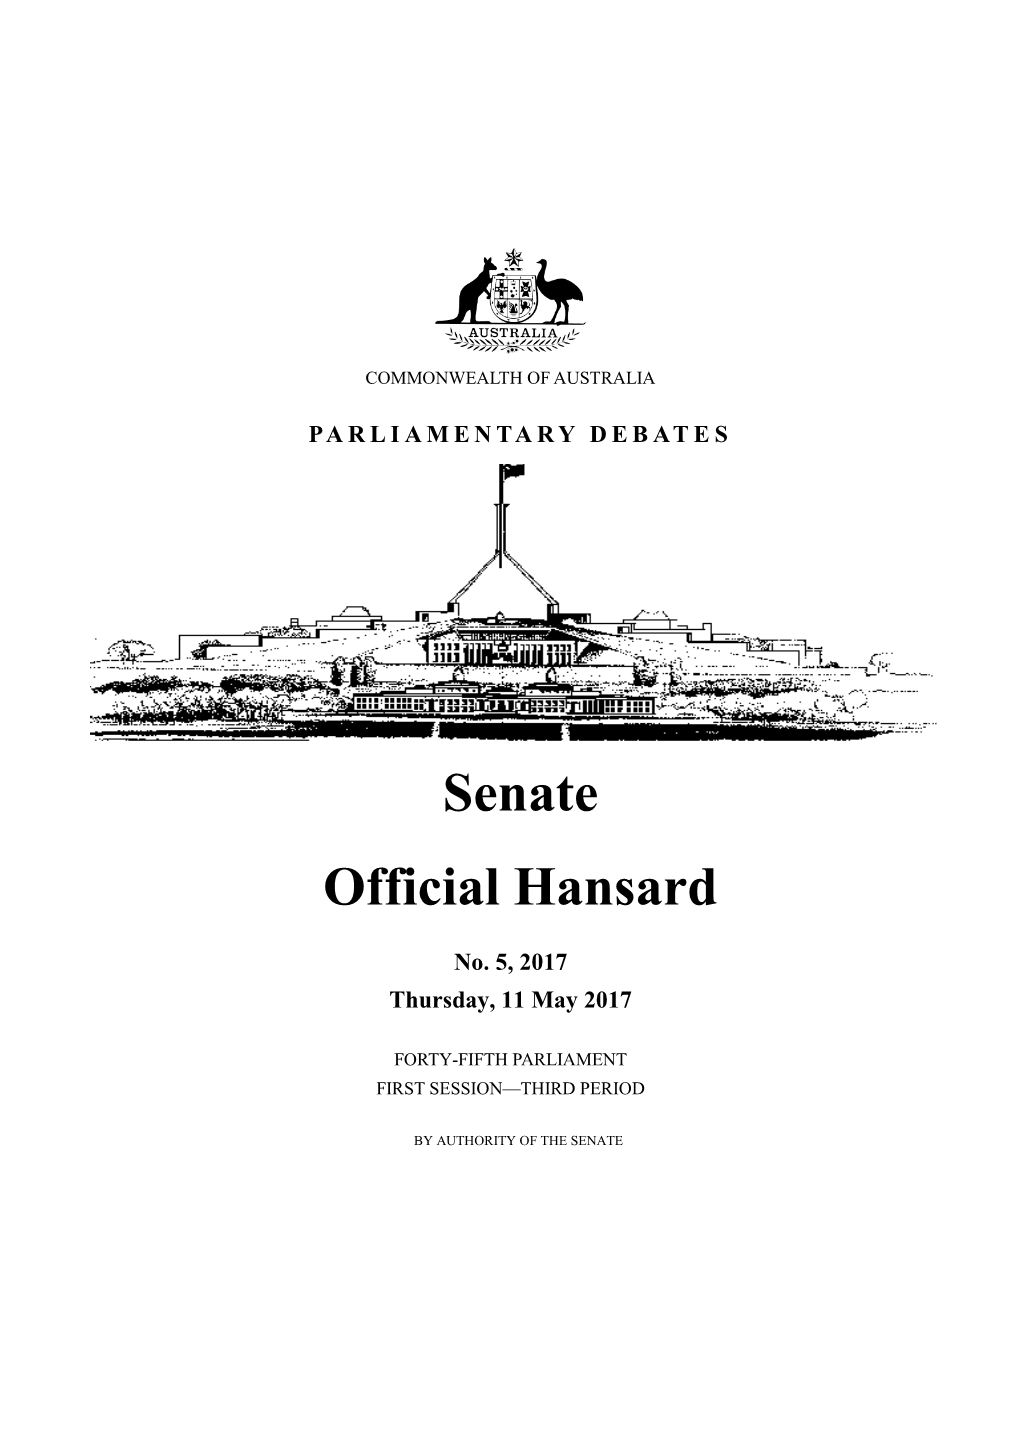 Senate Official Hansard